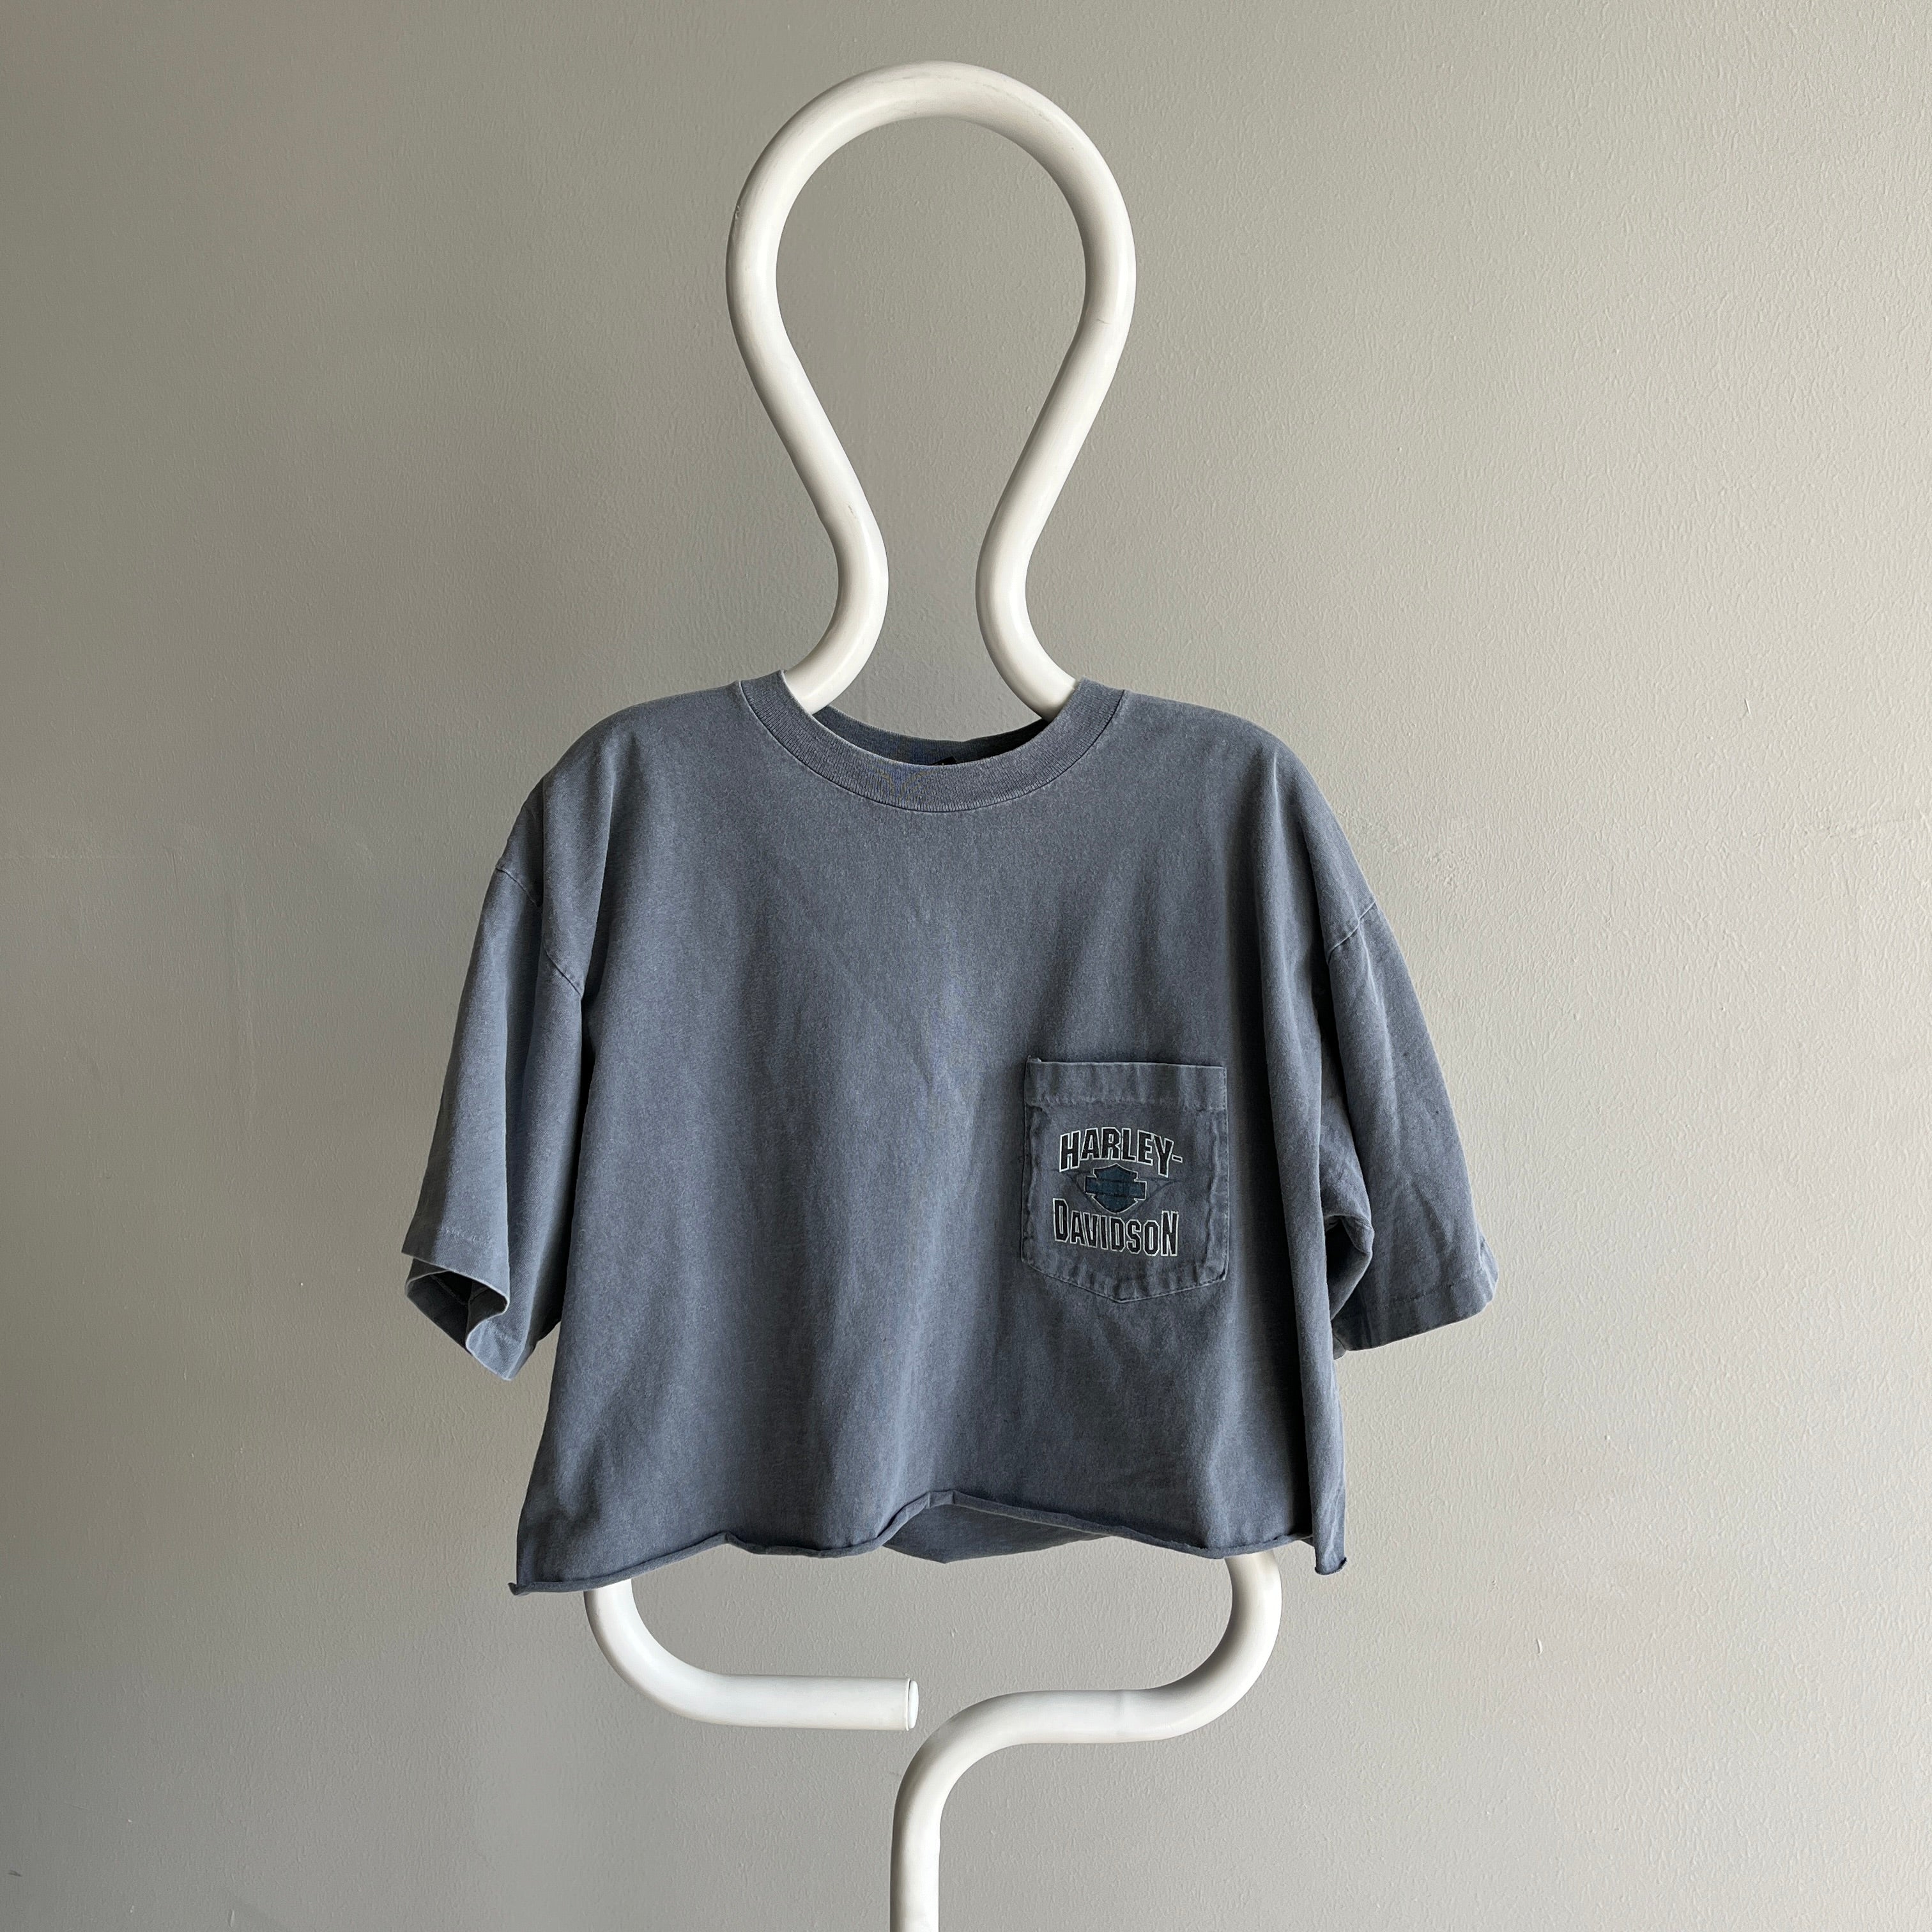 1990s DIY Cropped Harley Pocket T-Shirt